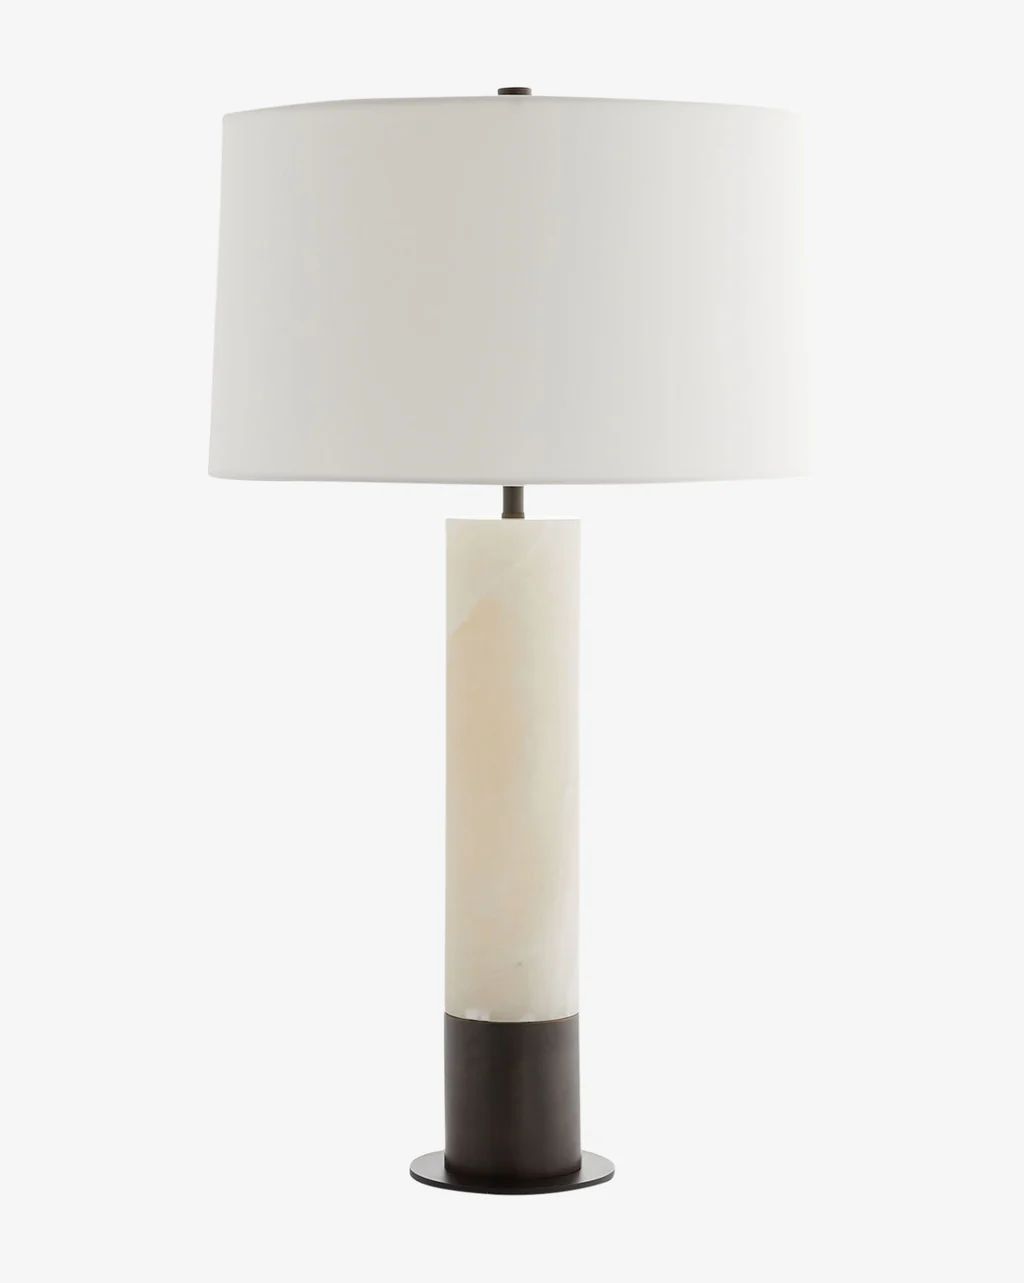 Nashik Lamp | McGee & Co.